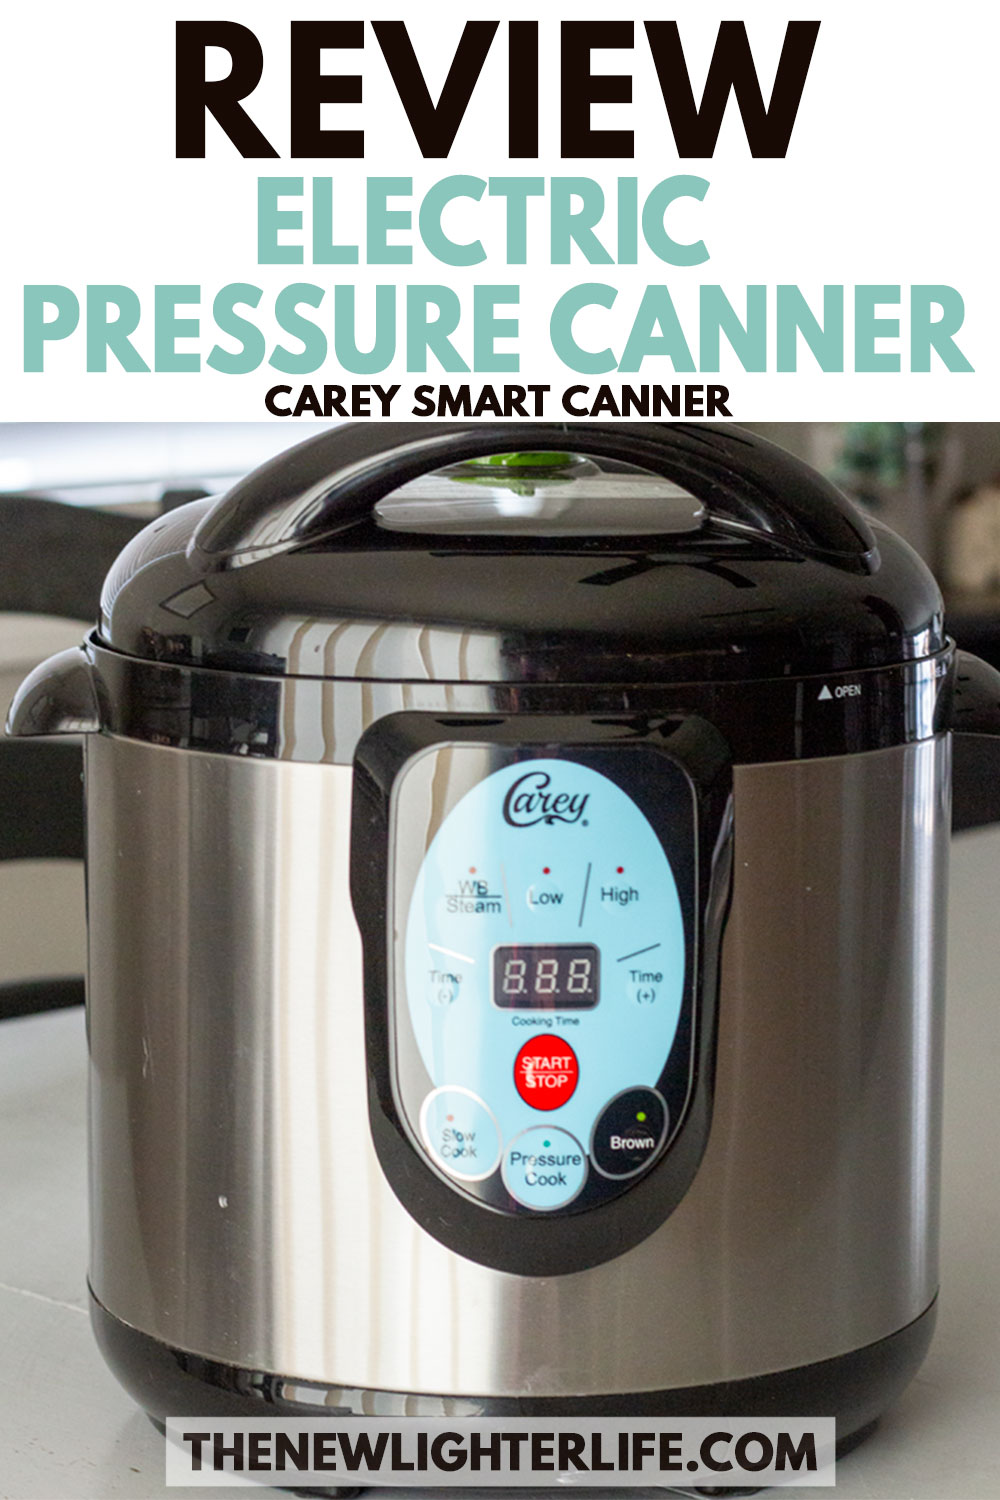 https://thenewlighterlife.com/wp-content/uploads/2022/02/carey-electric-pressure-canner-review-pinterest-1.jpg